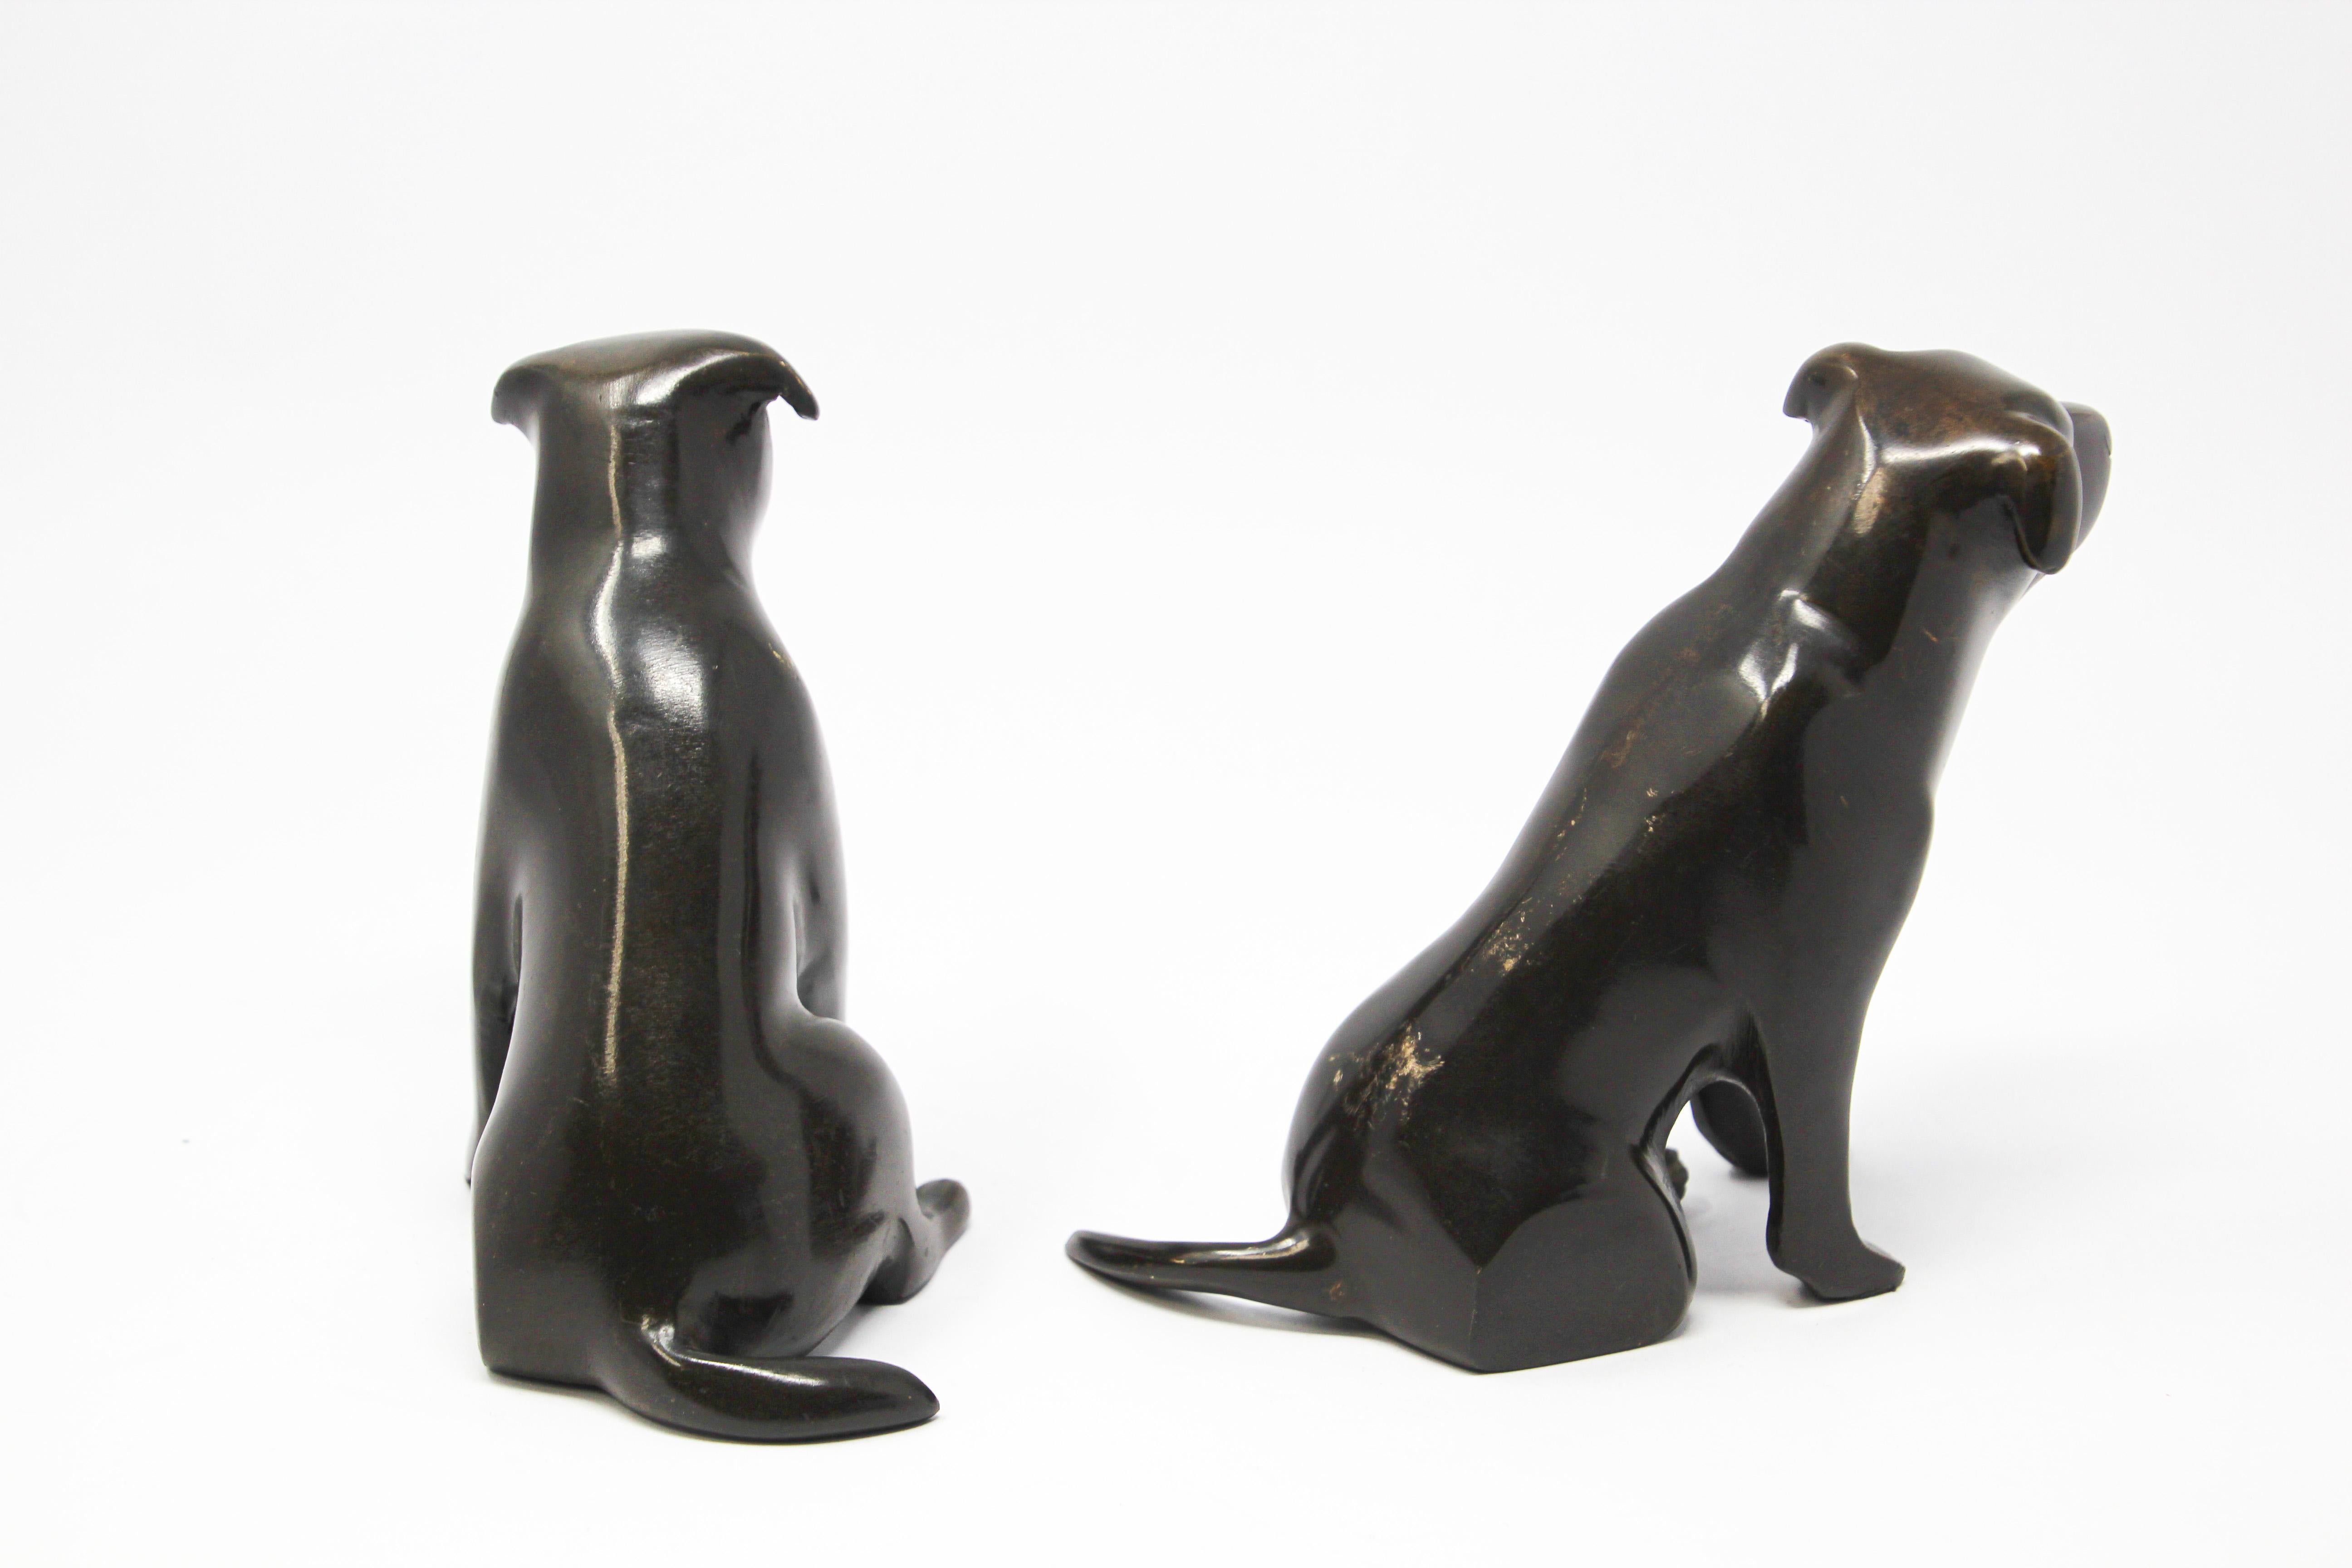 Set of Cast Metal Sculpture of Labrador Dogs Bookends 1